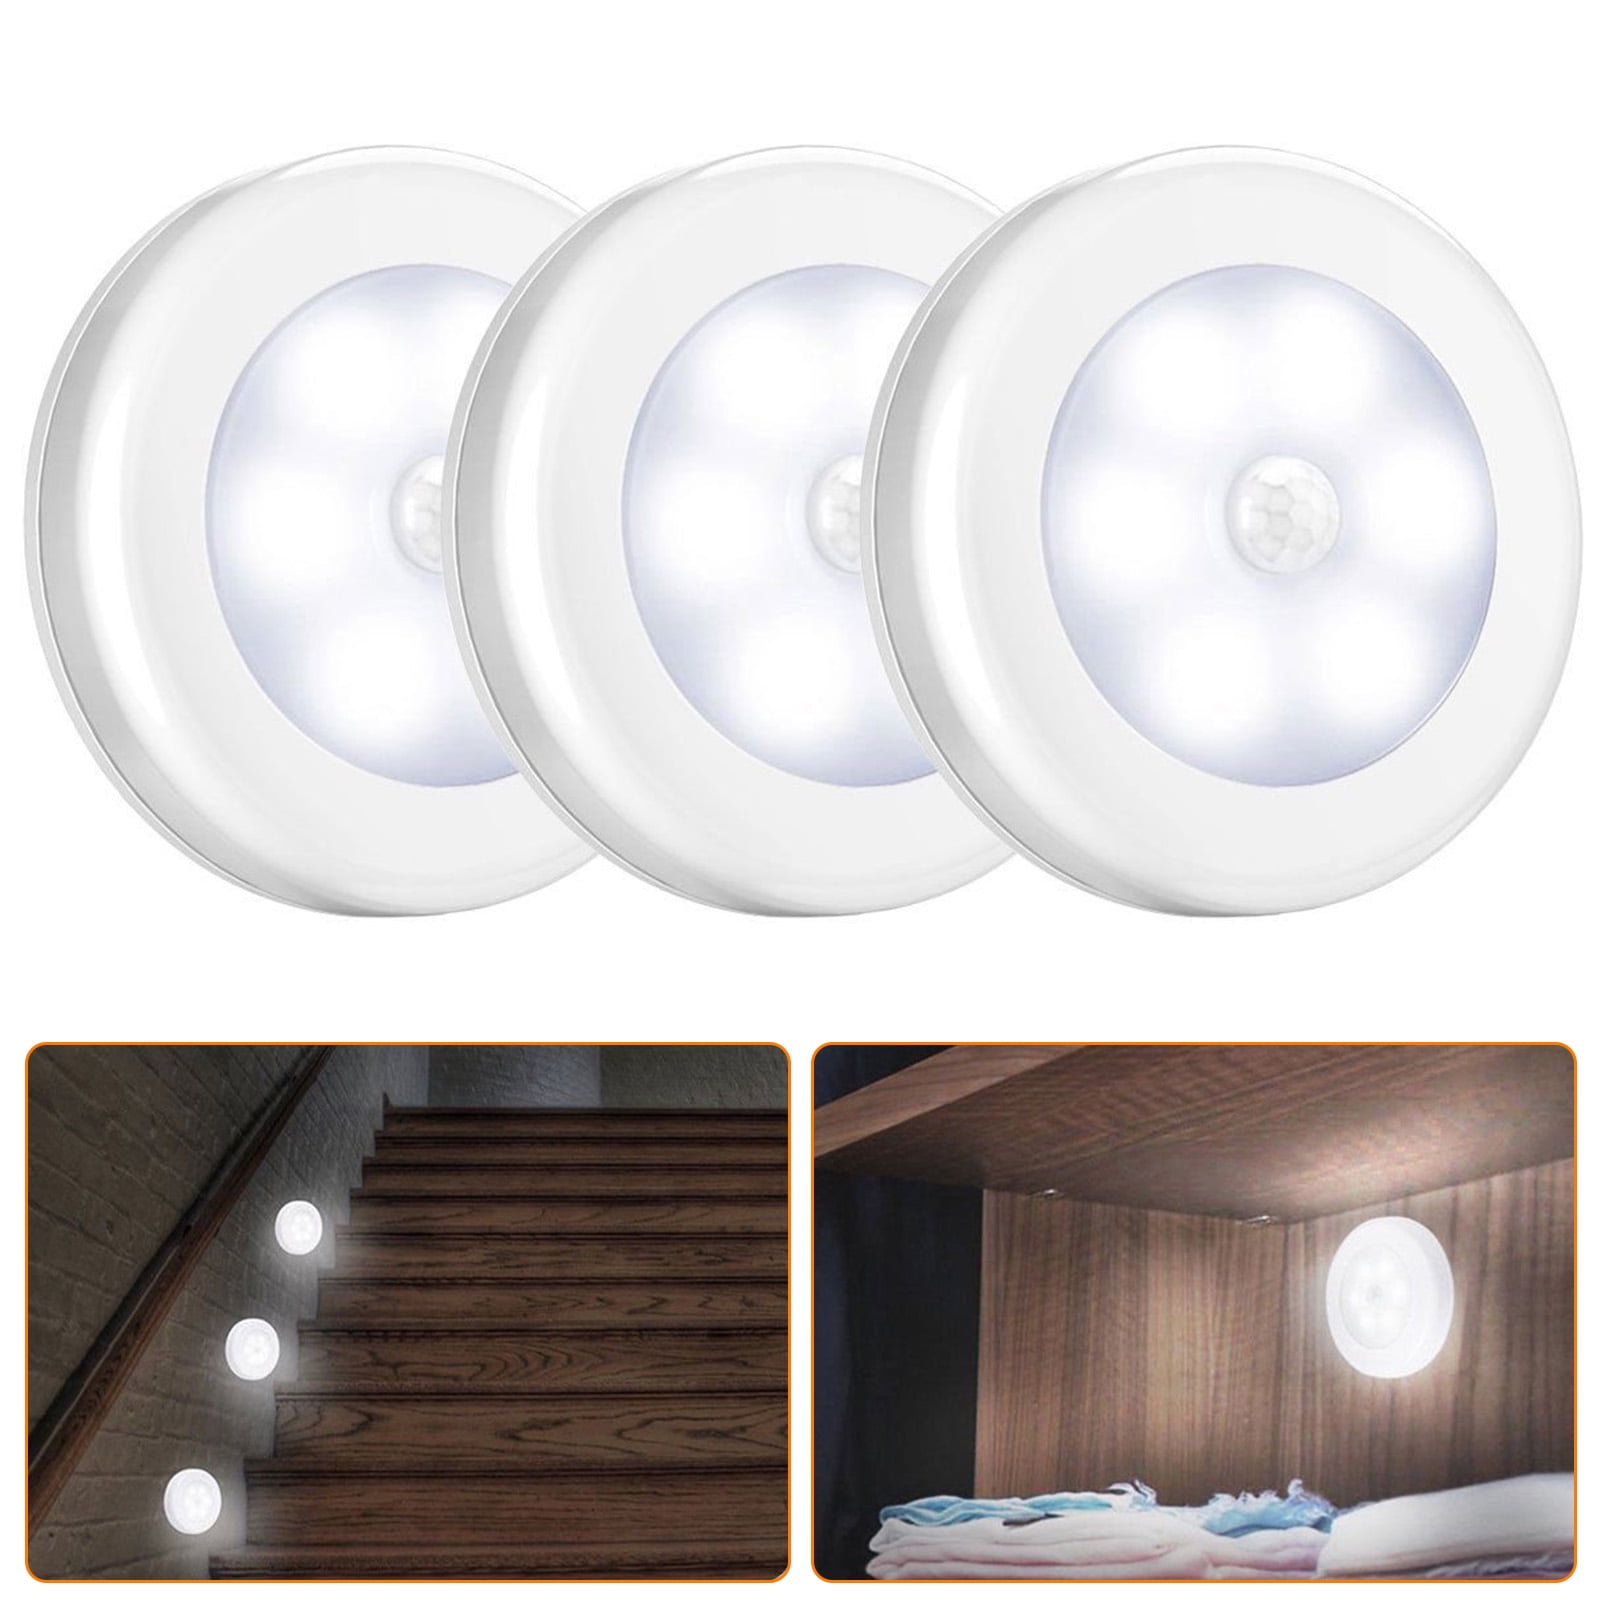 6 LED Motion Sensor Closet Light Wireless Night Cabinet Battery Powered Indoor 